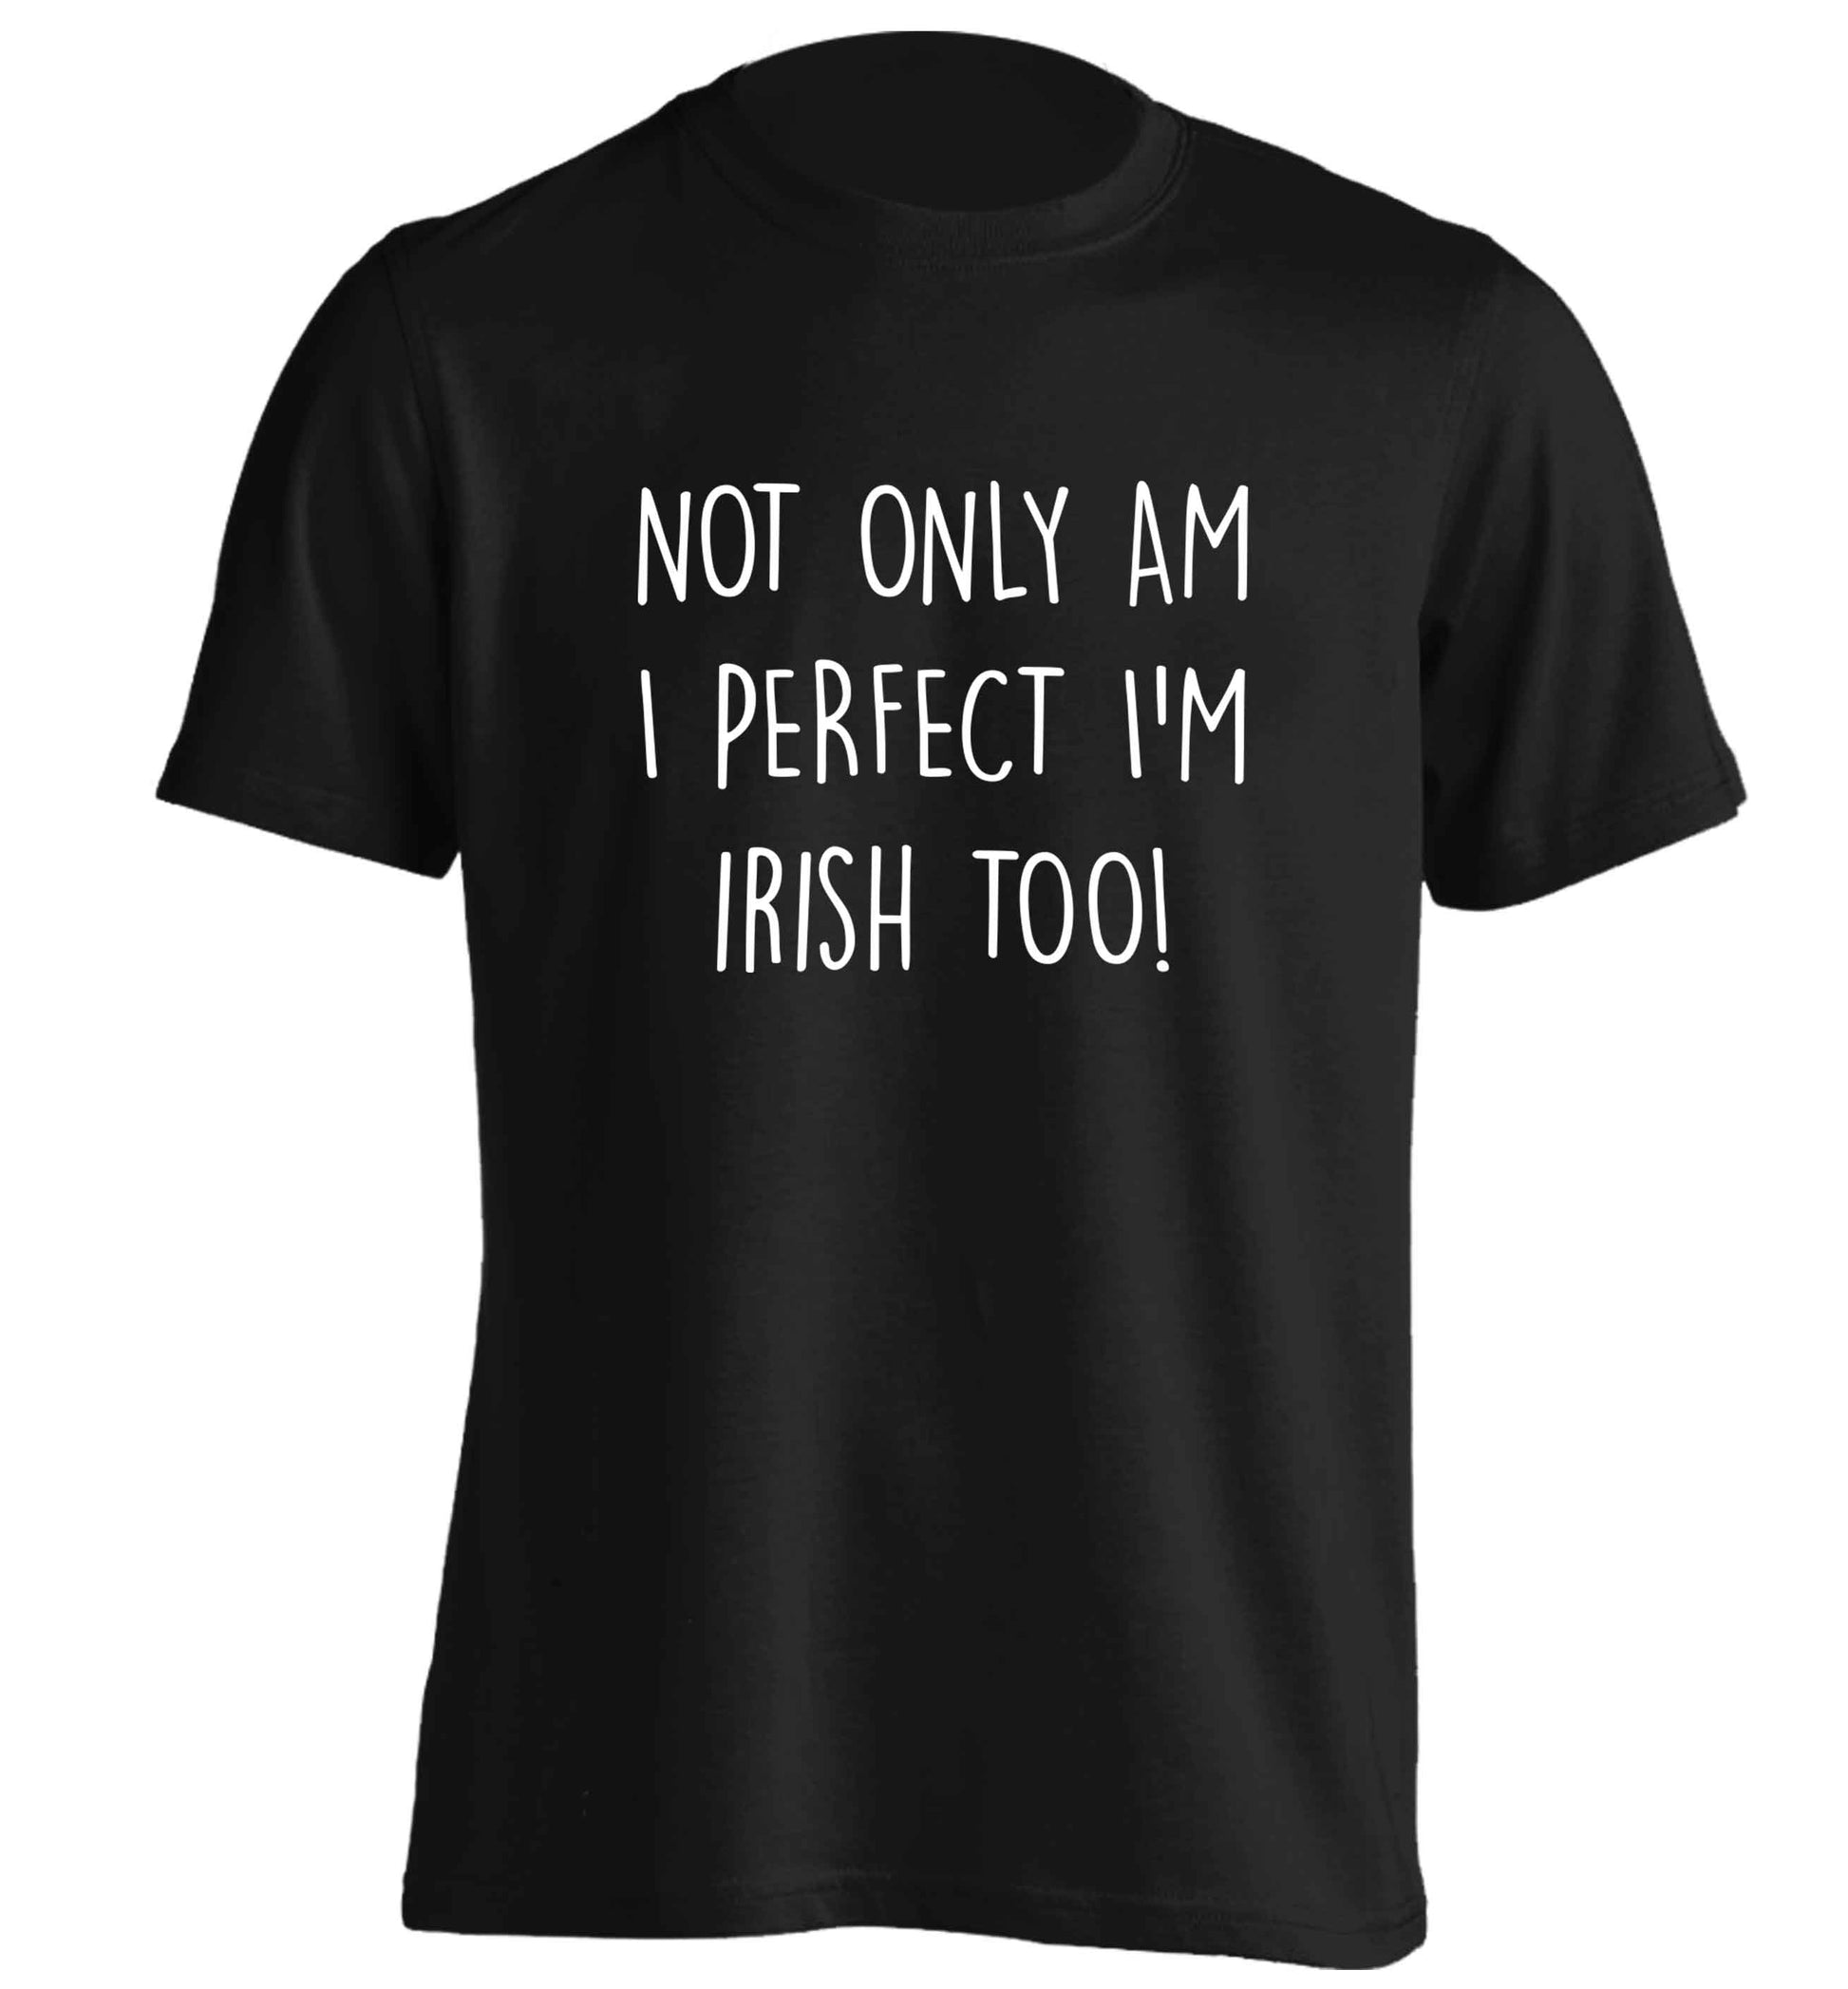 Not only am I perfect I'm Irish too! adults unisex black Tshirt 2XL